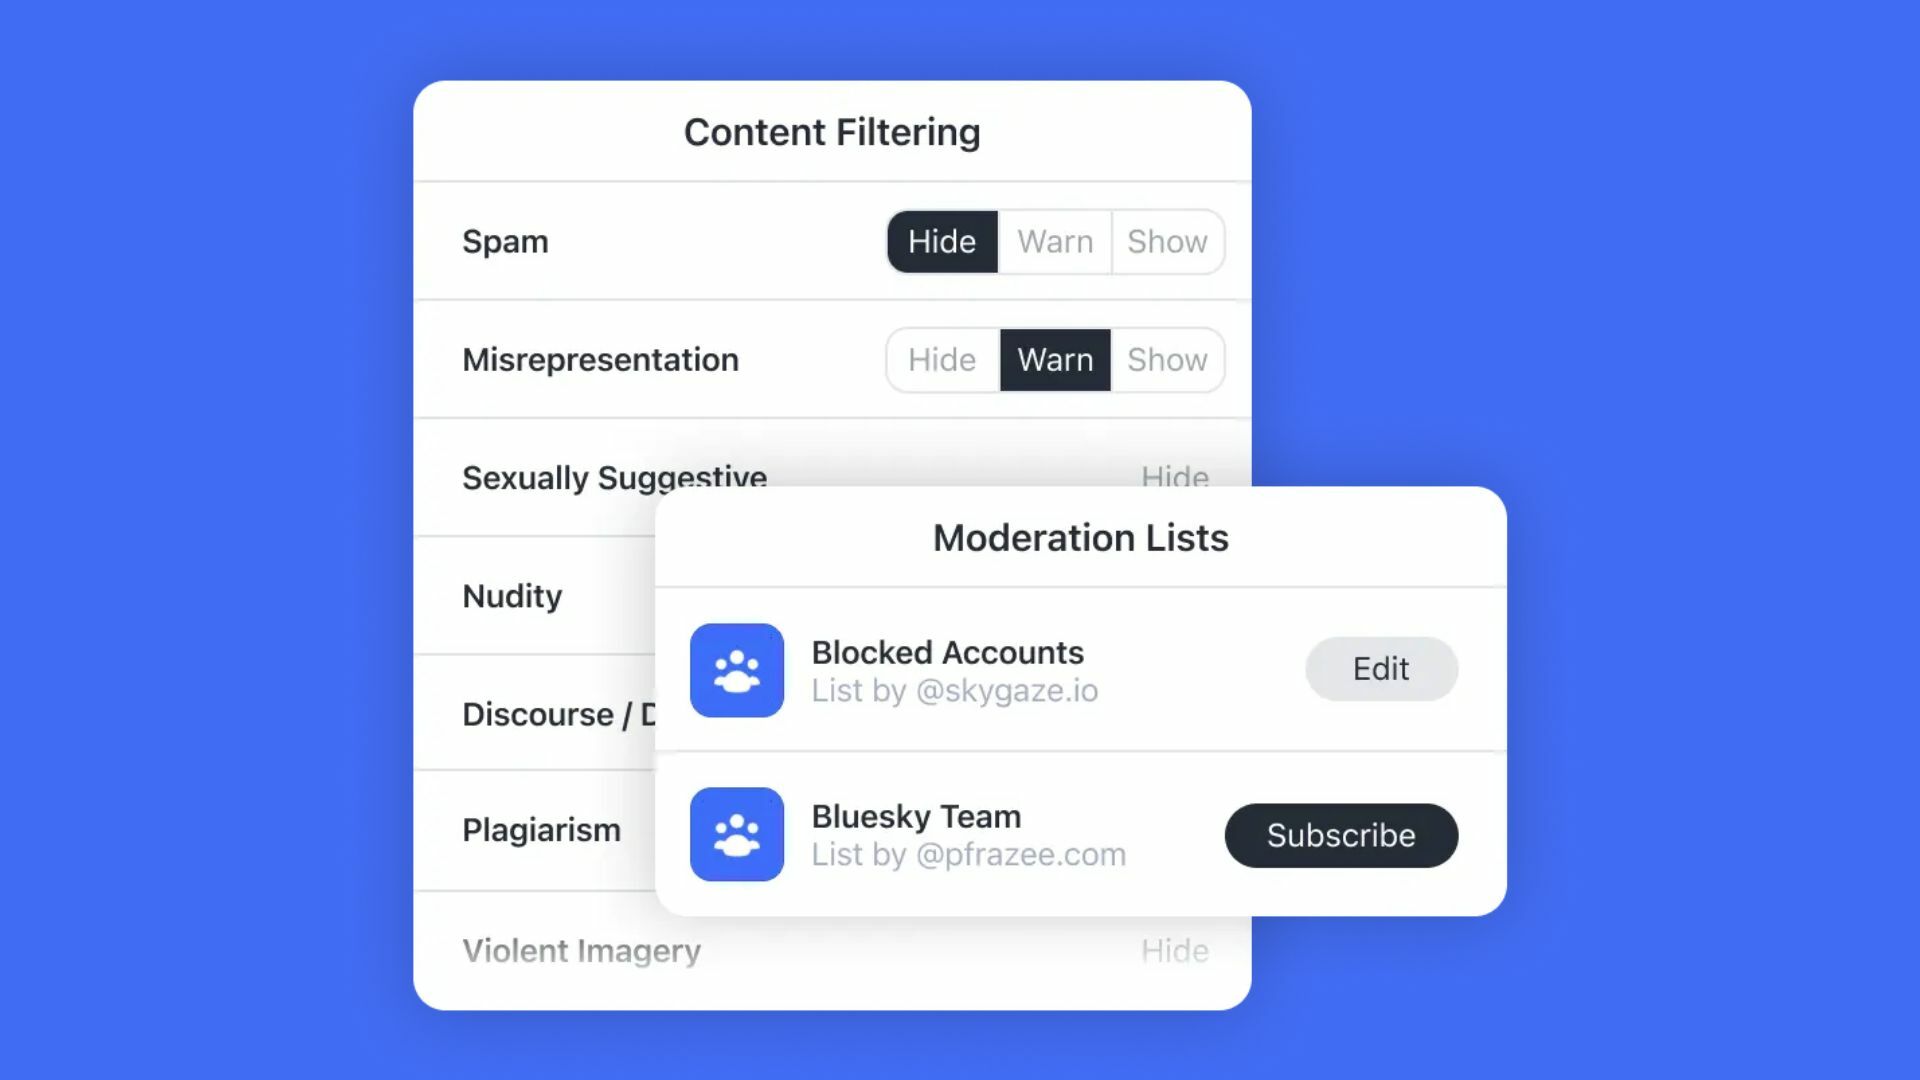 Screenshots of Bluesky's moderation tools.